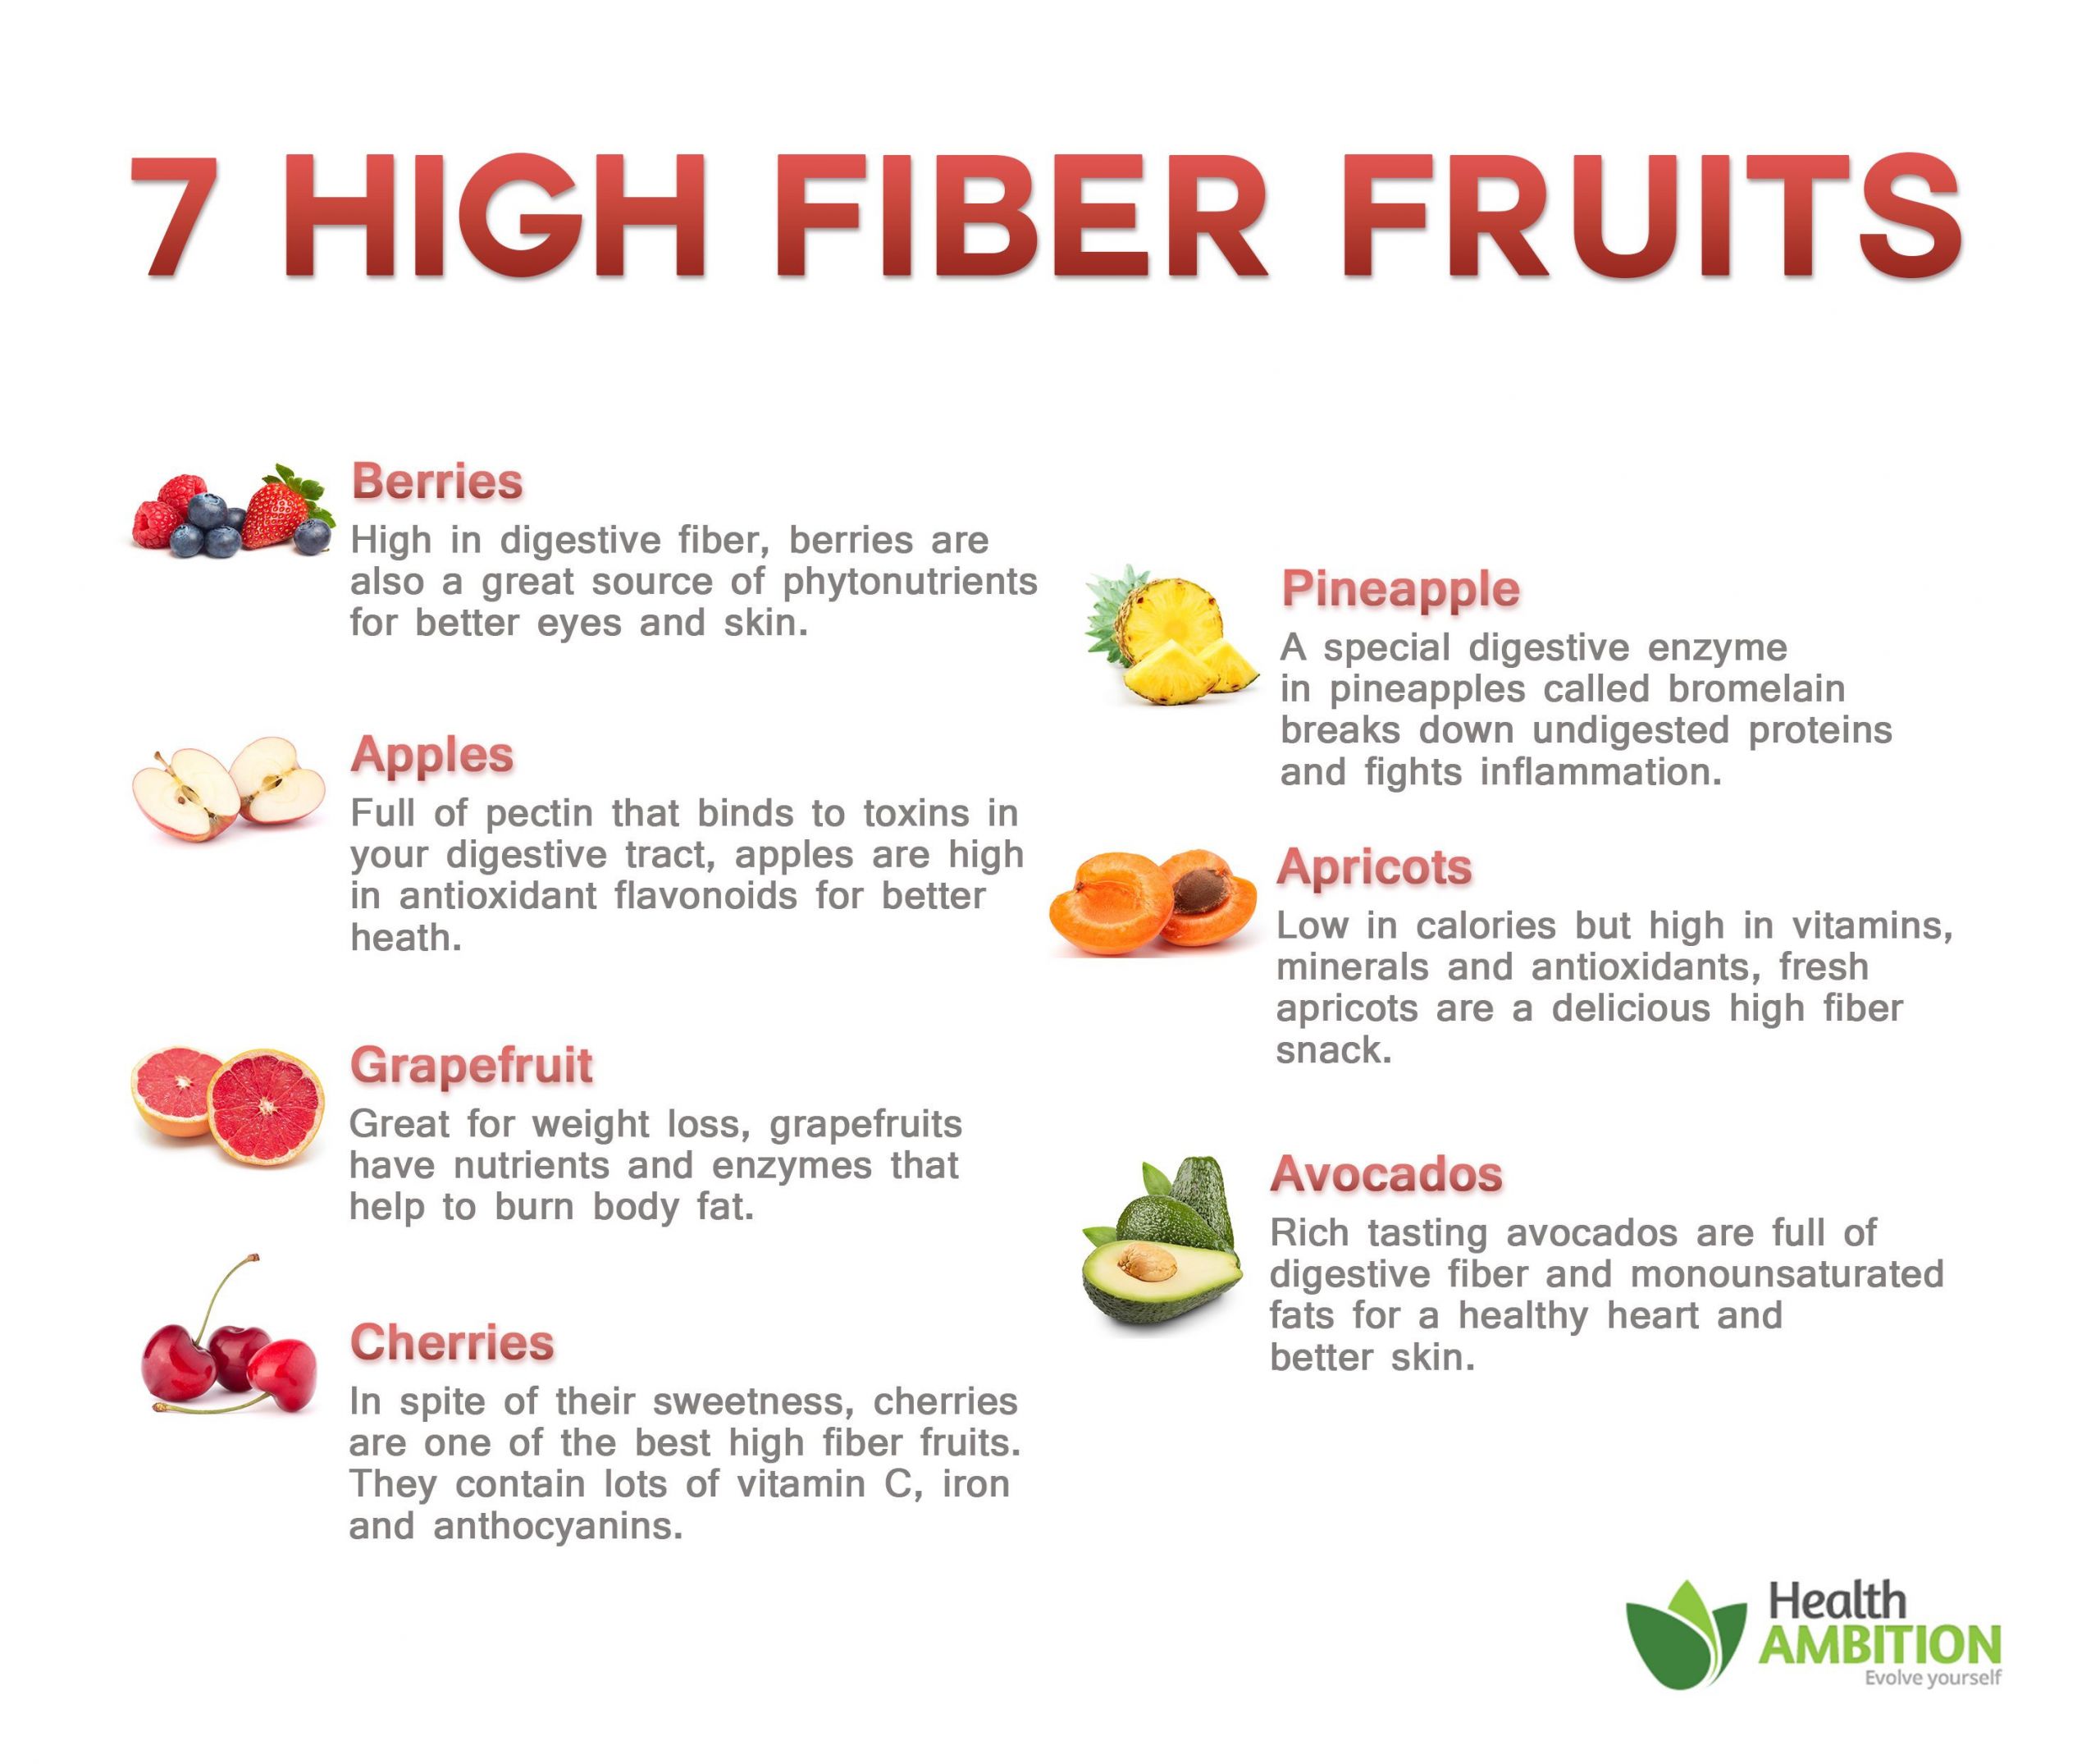 Healthy High Fiber Snacks
 7 High Fiber Fruits for Breakfast and Healthy Snacks